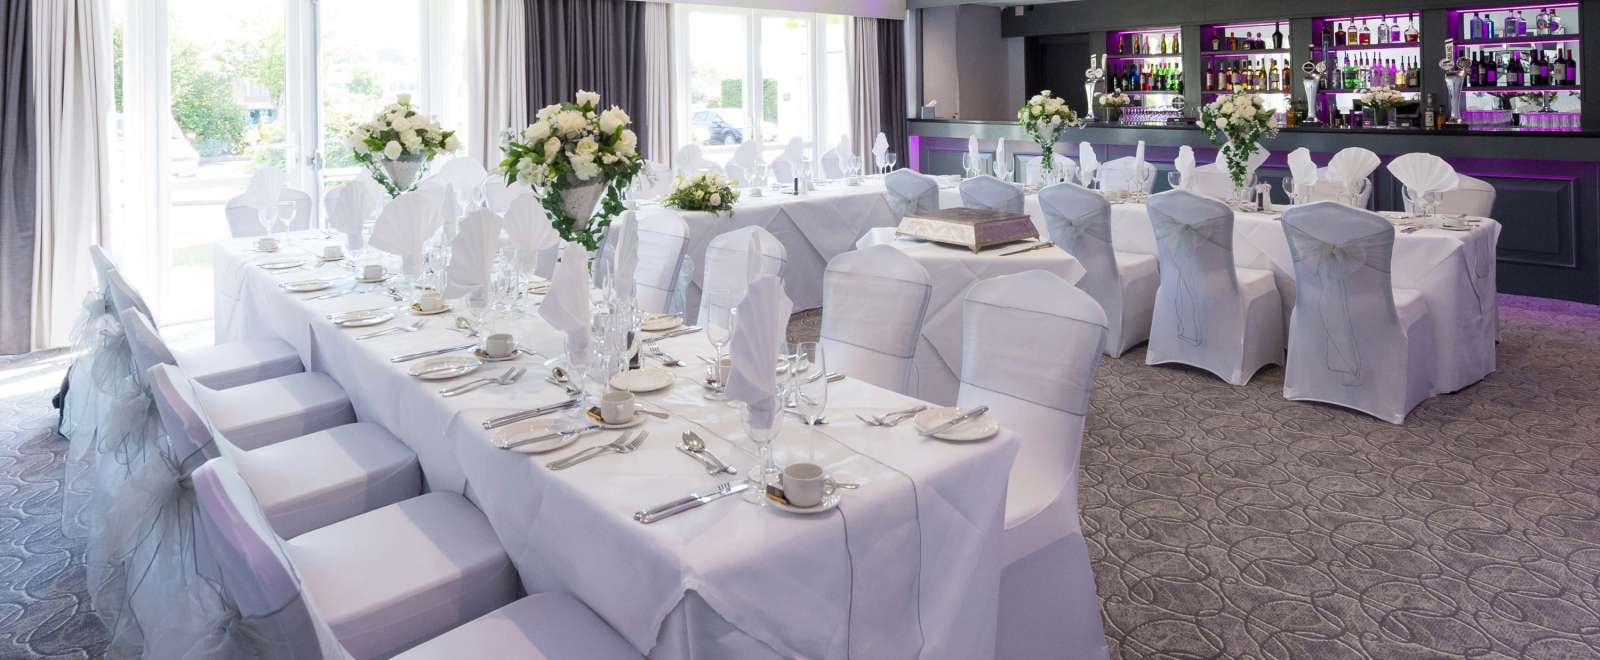 Barnstaple Hotel Ashford Suite Wedding Meal Tables and Bar